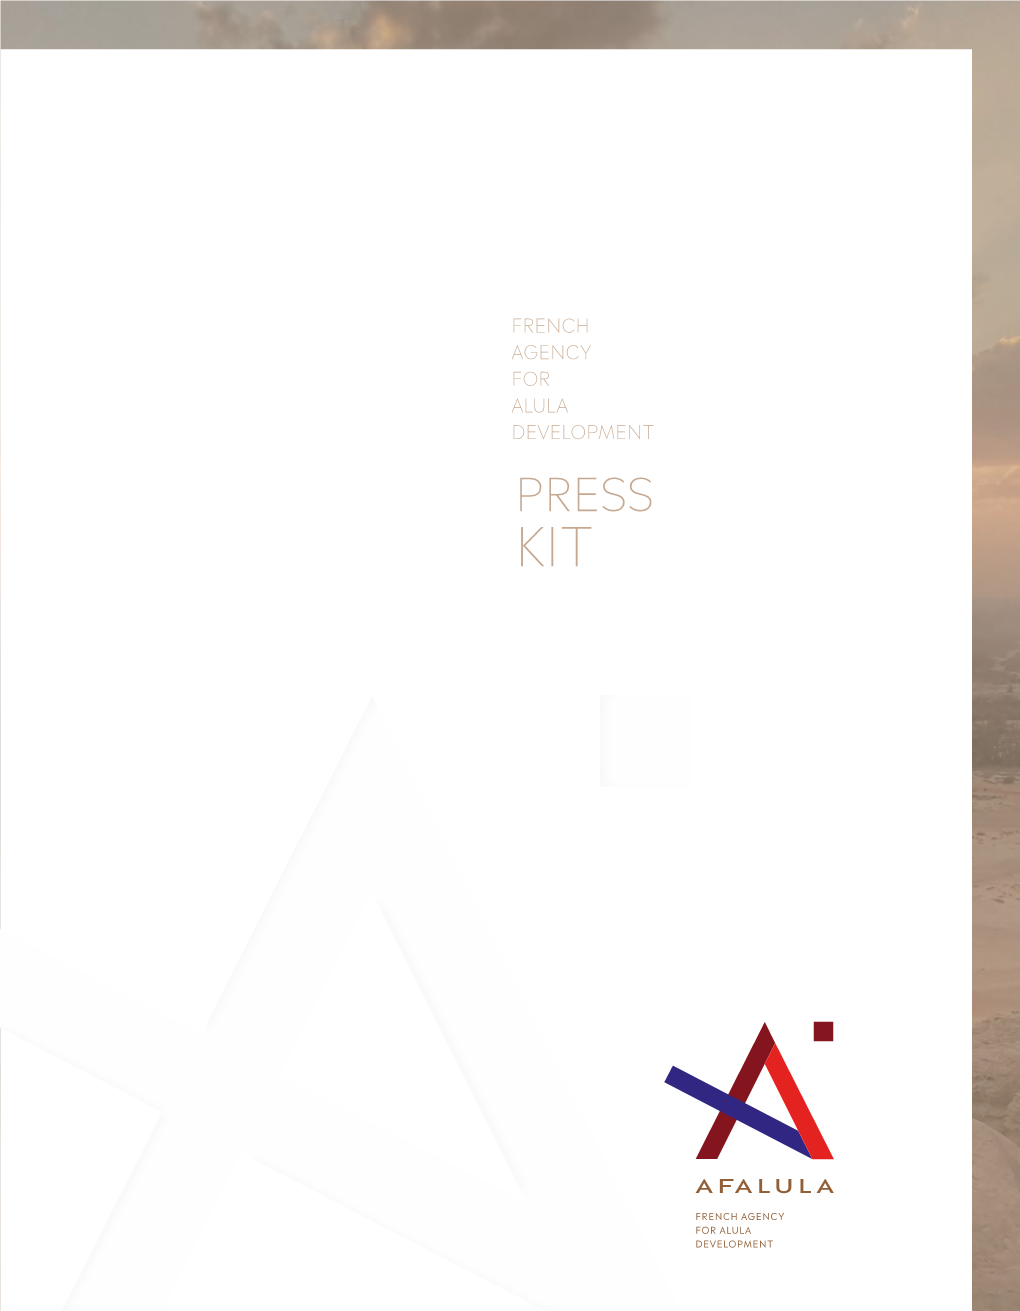 French Agency for Alula Development Press Kit